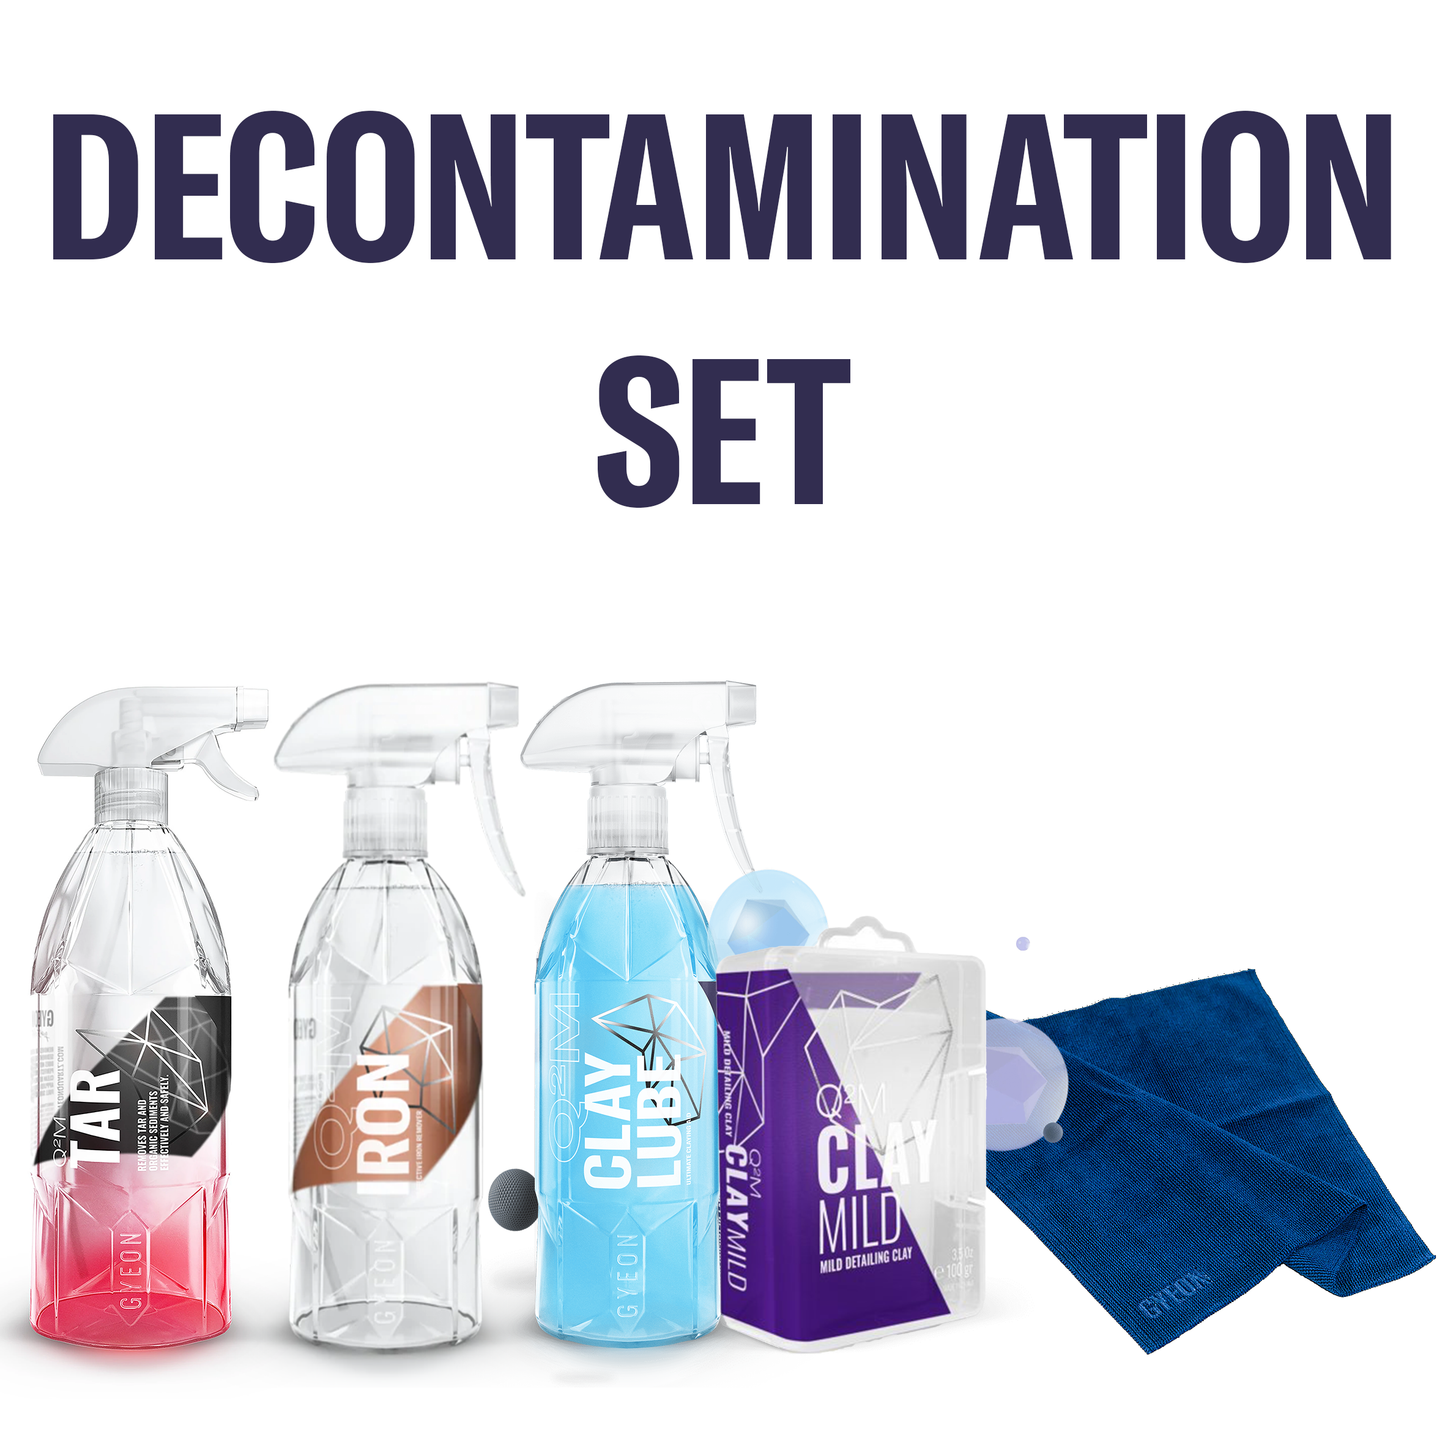 Decontamination Set